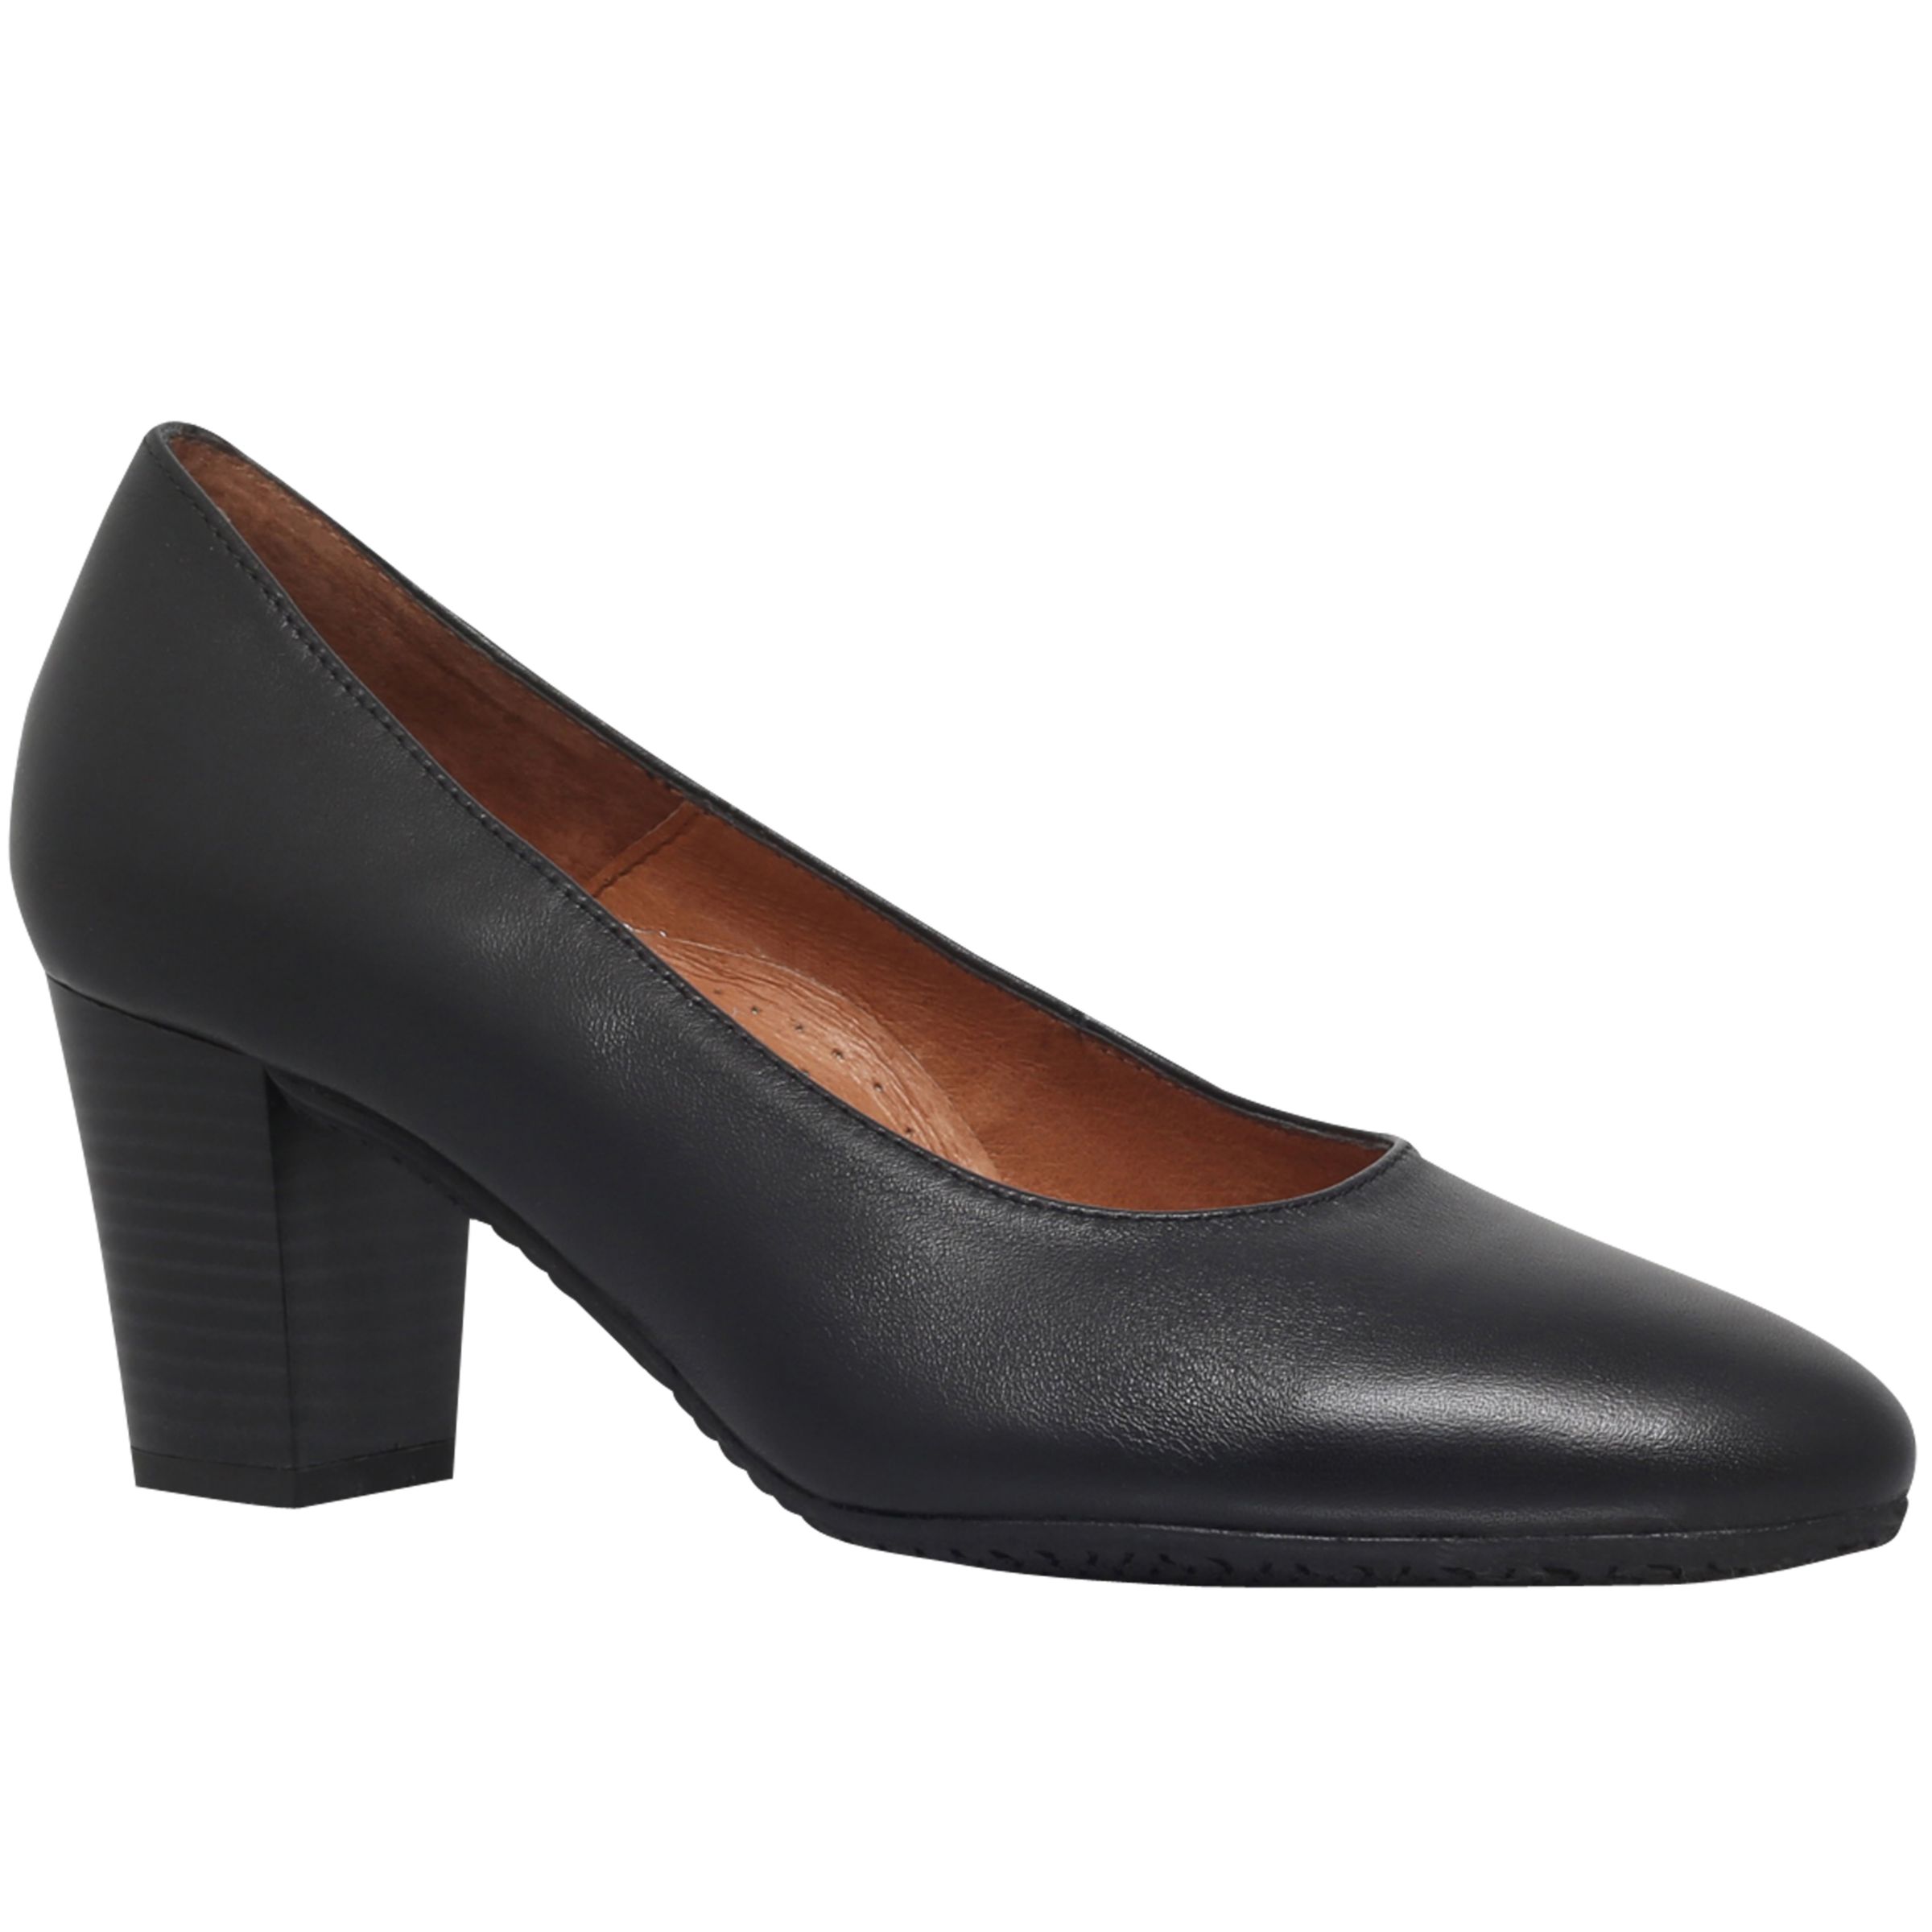 Carvela Comfort Air Block Heeled Court Shoes, Black, 3